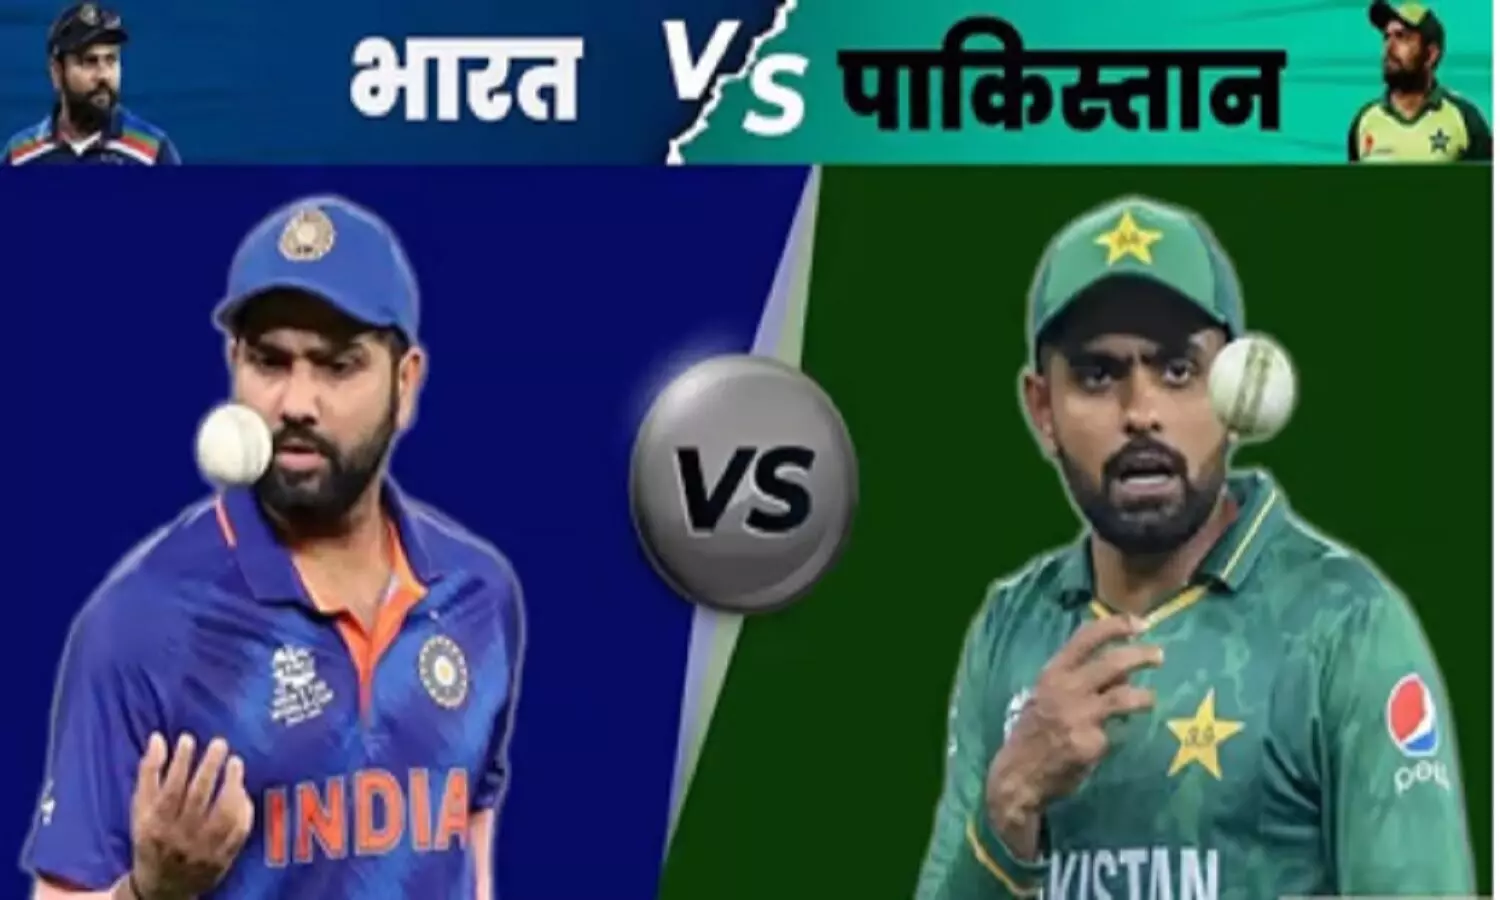 IND Vs PAK Todays Match Playing 11: India Vs Pakistan का मैच आज, टीम में बड़ा बदलाव, जानें प्लेइंग 11